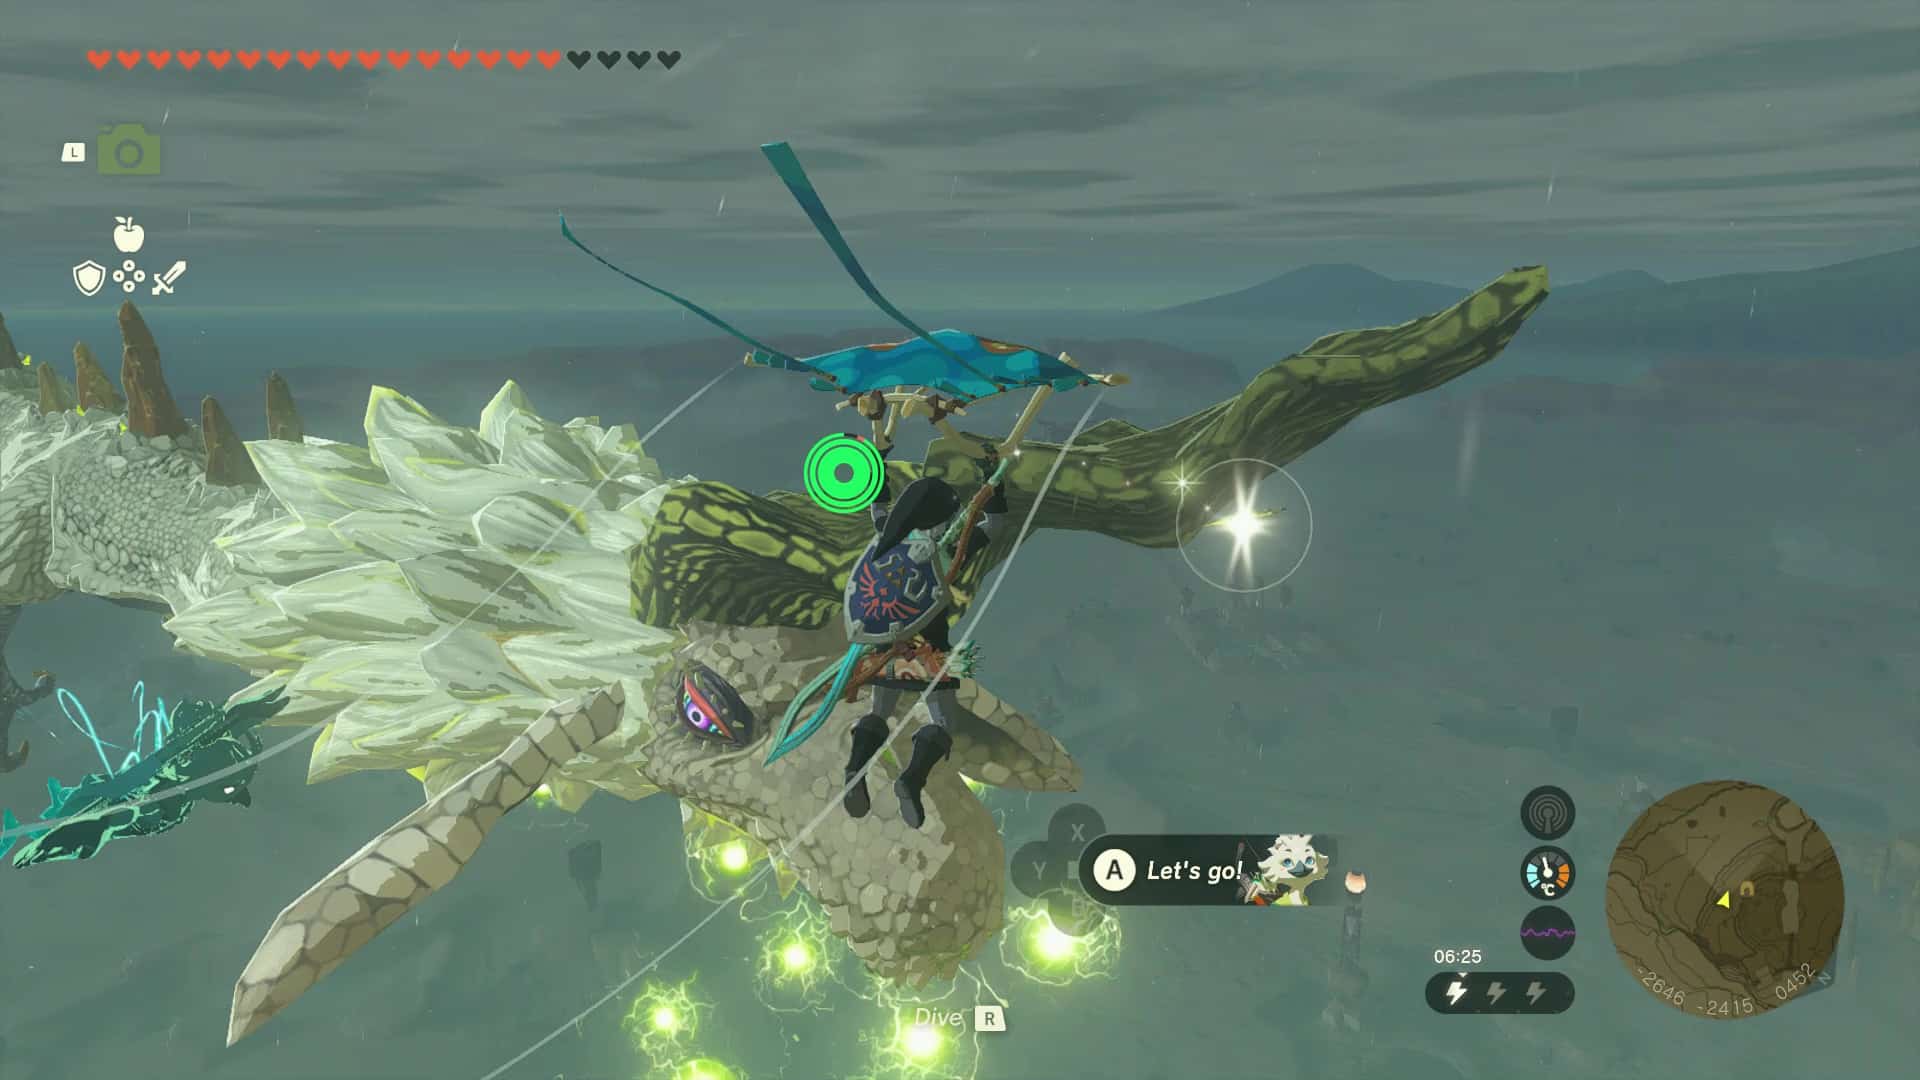 Link glisse vers Farosh le dragon dans Zelda Tears of the Kingdom